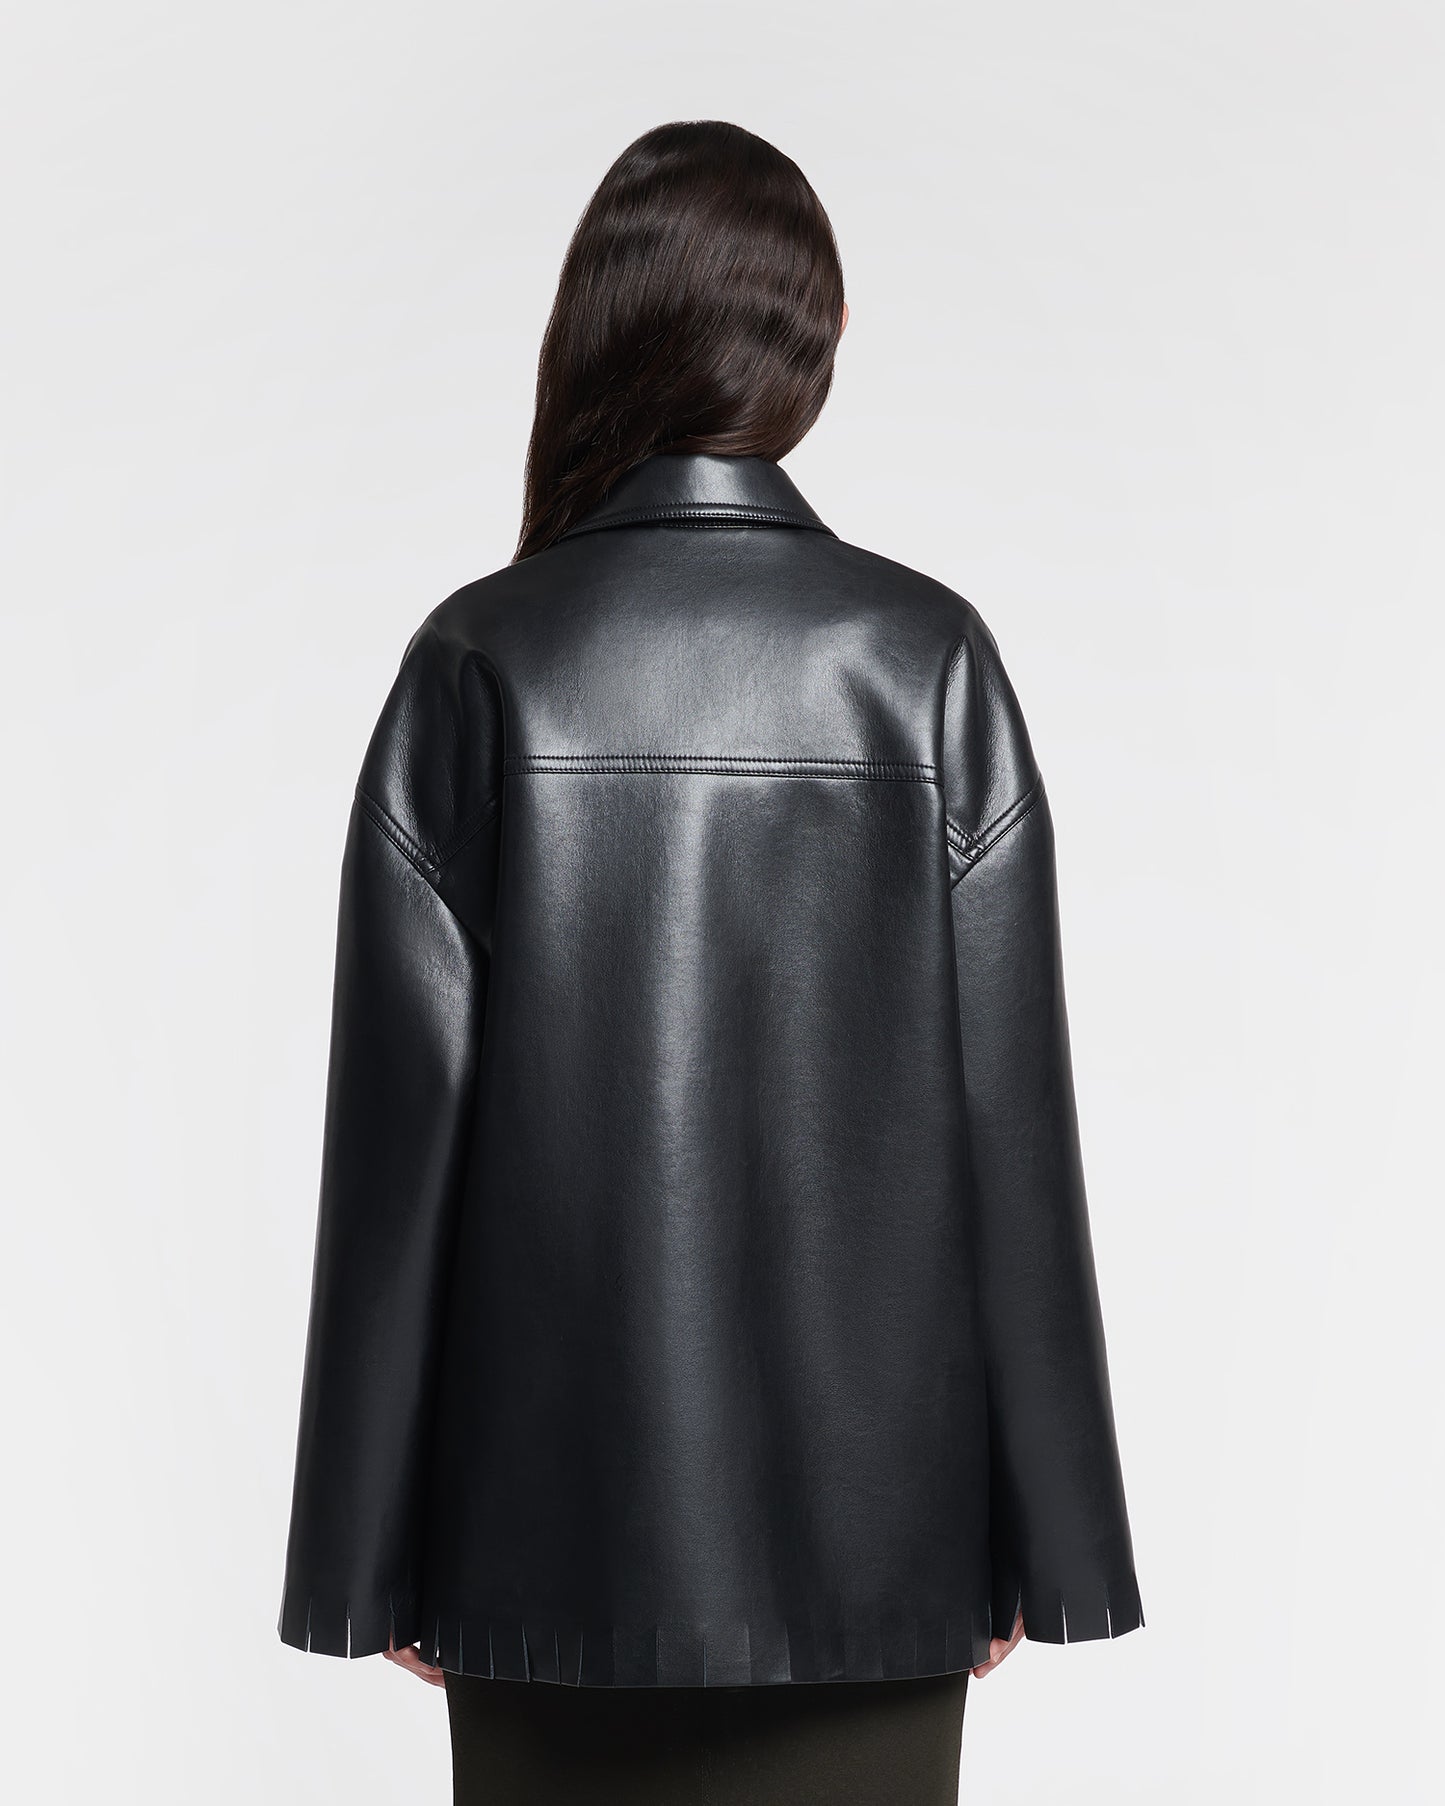 Wynter - Regenerated Leather Jacket - Black